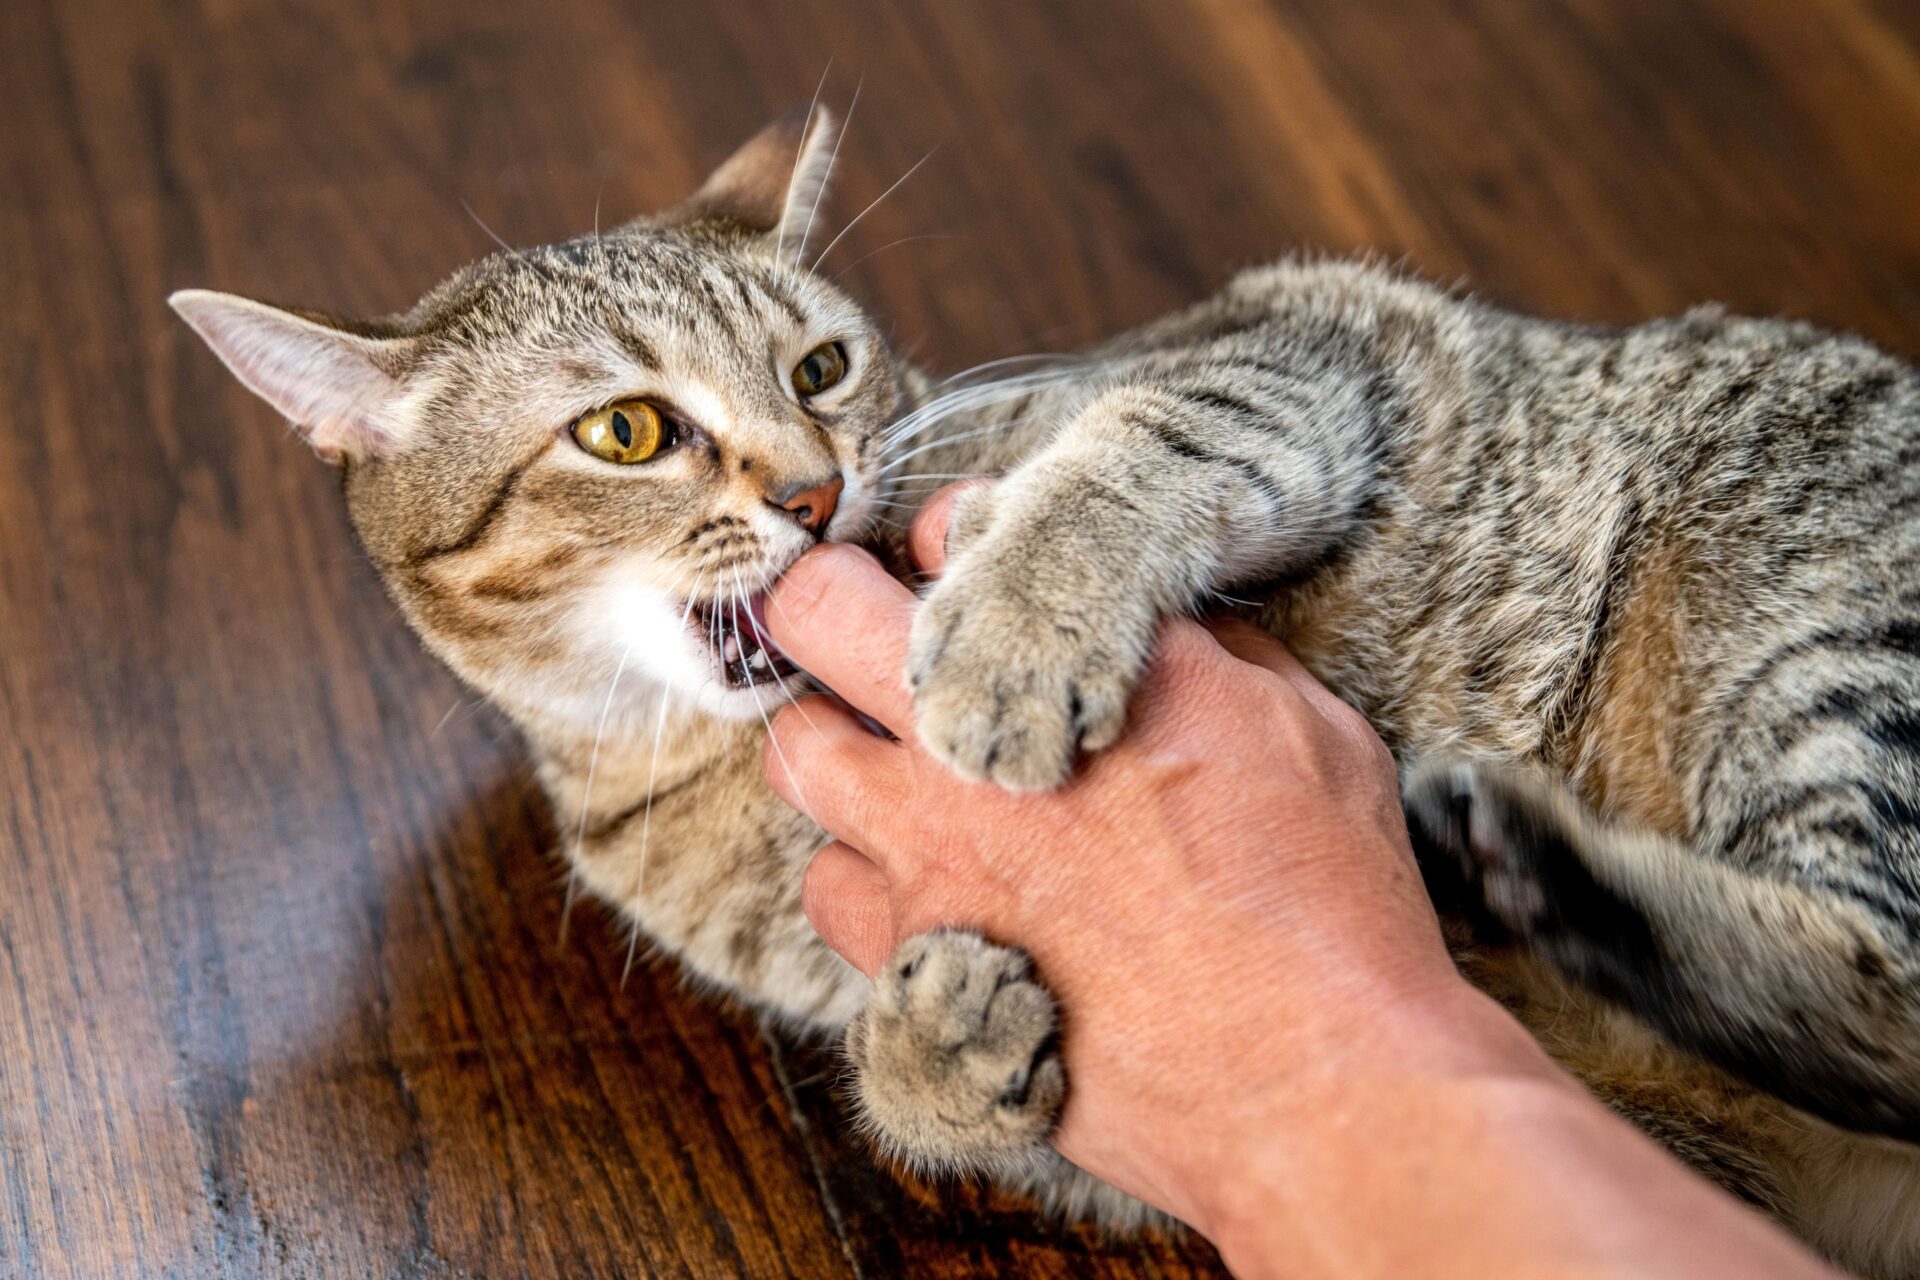 Cat Biting When Petted.Why? - Understanding Feline Behavior